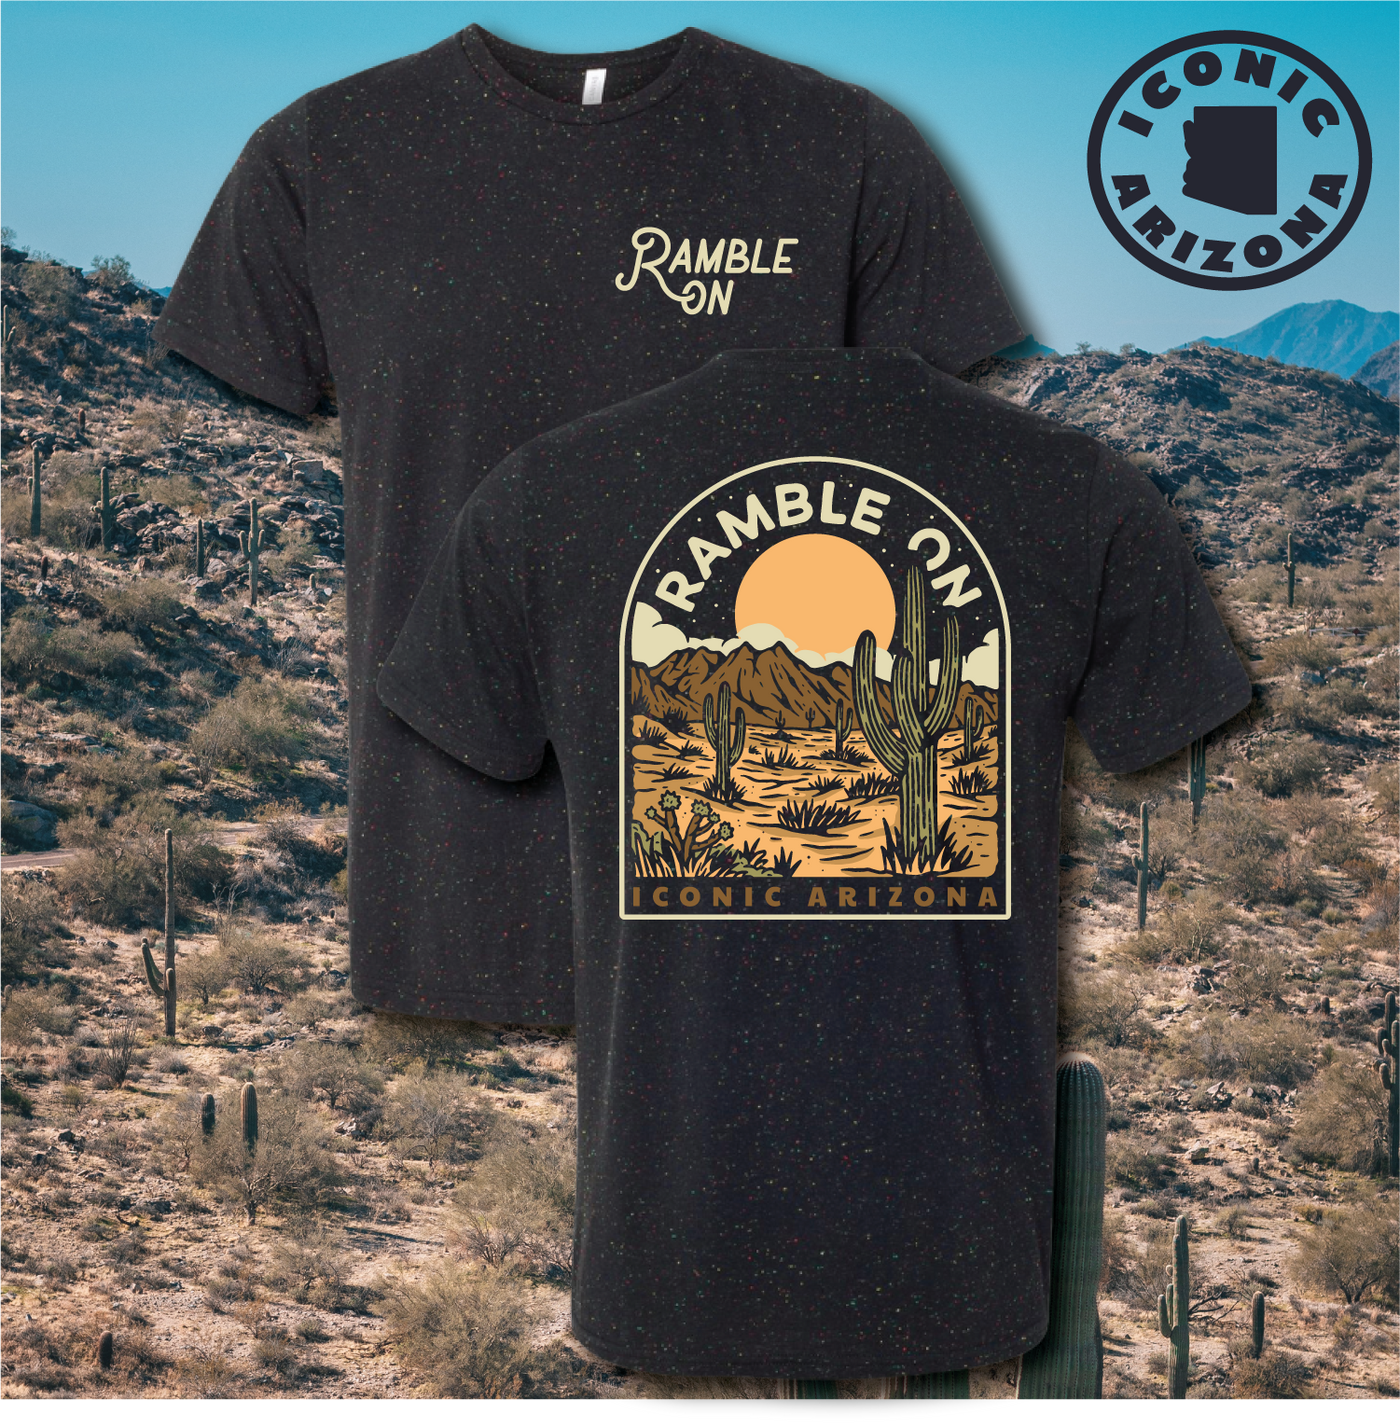 Iconic Arizona The Desert Rambler Tee